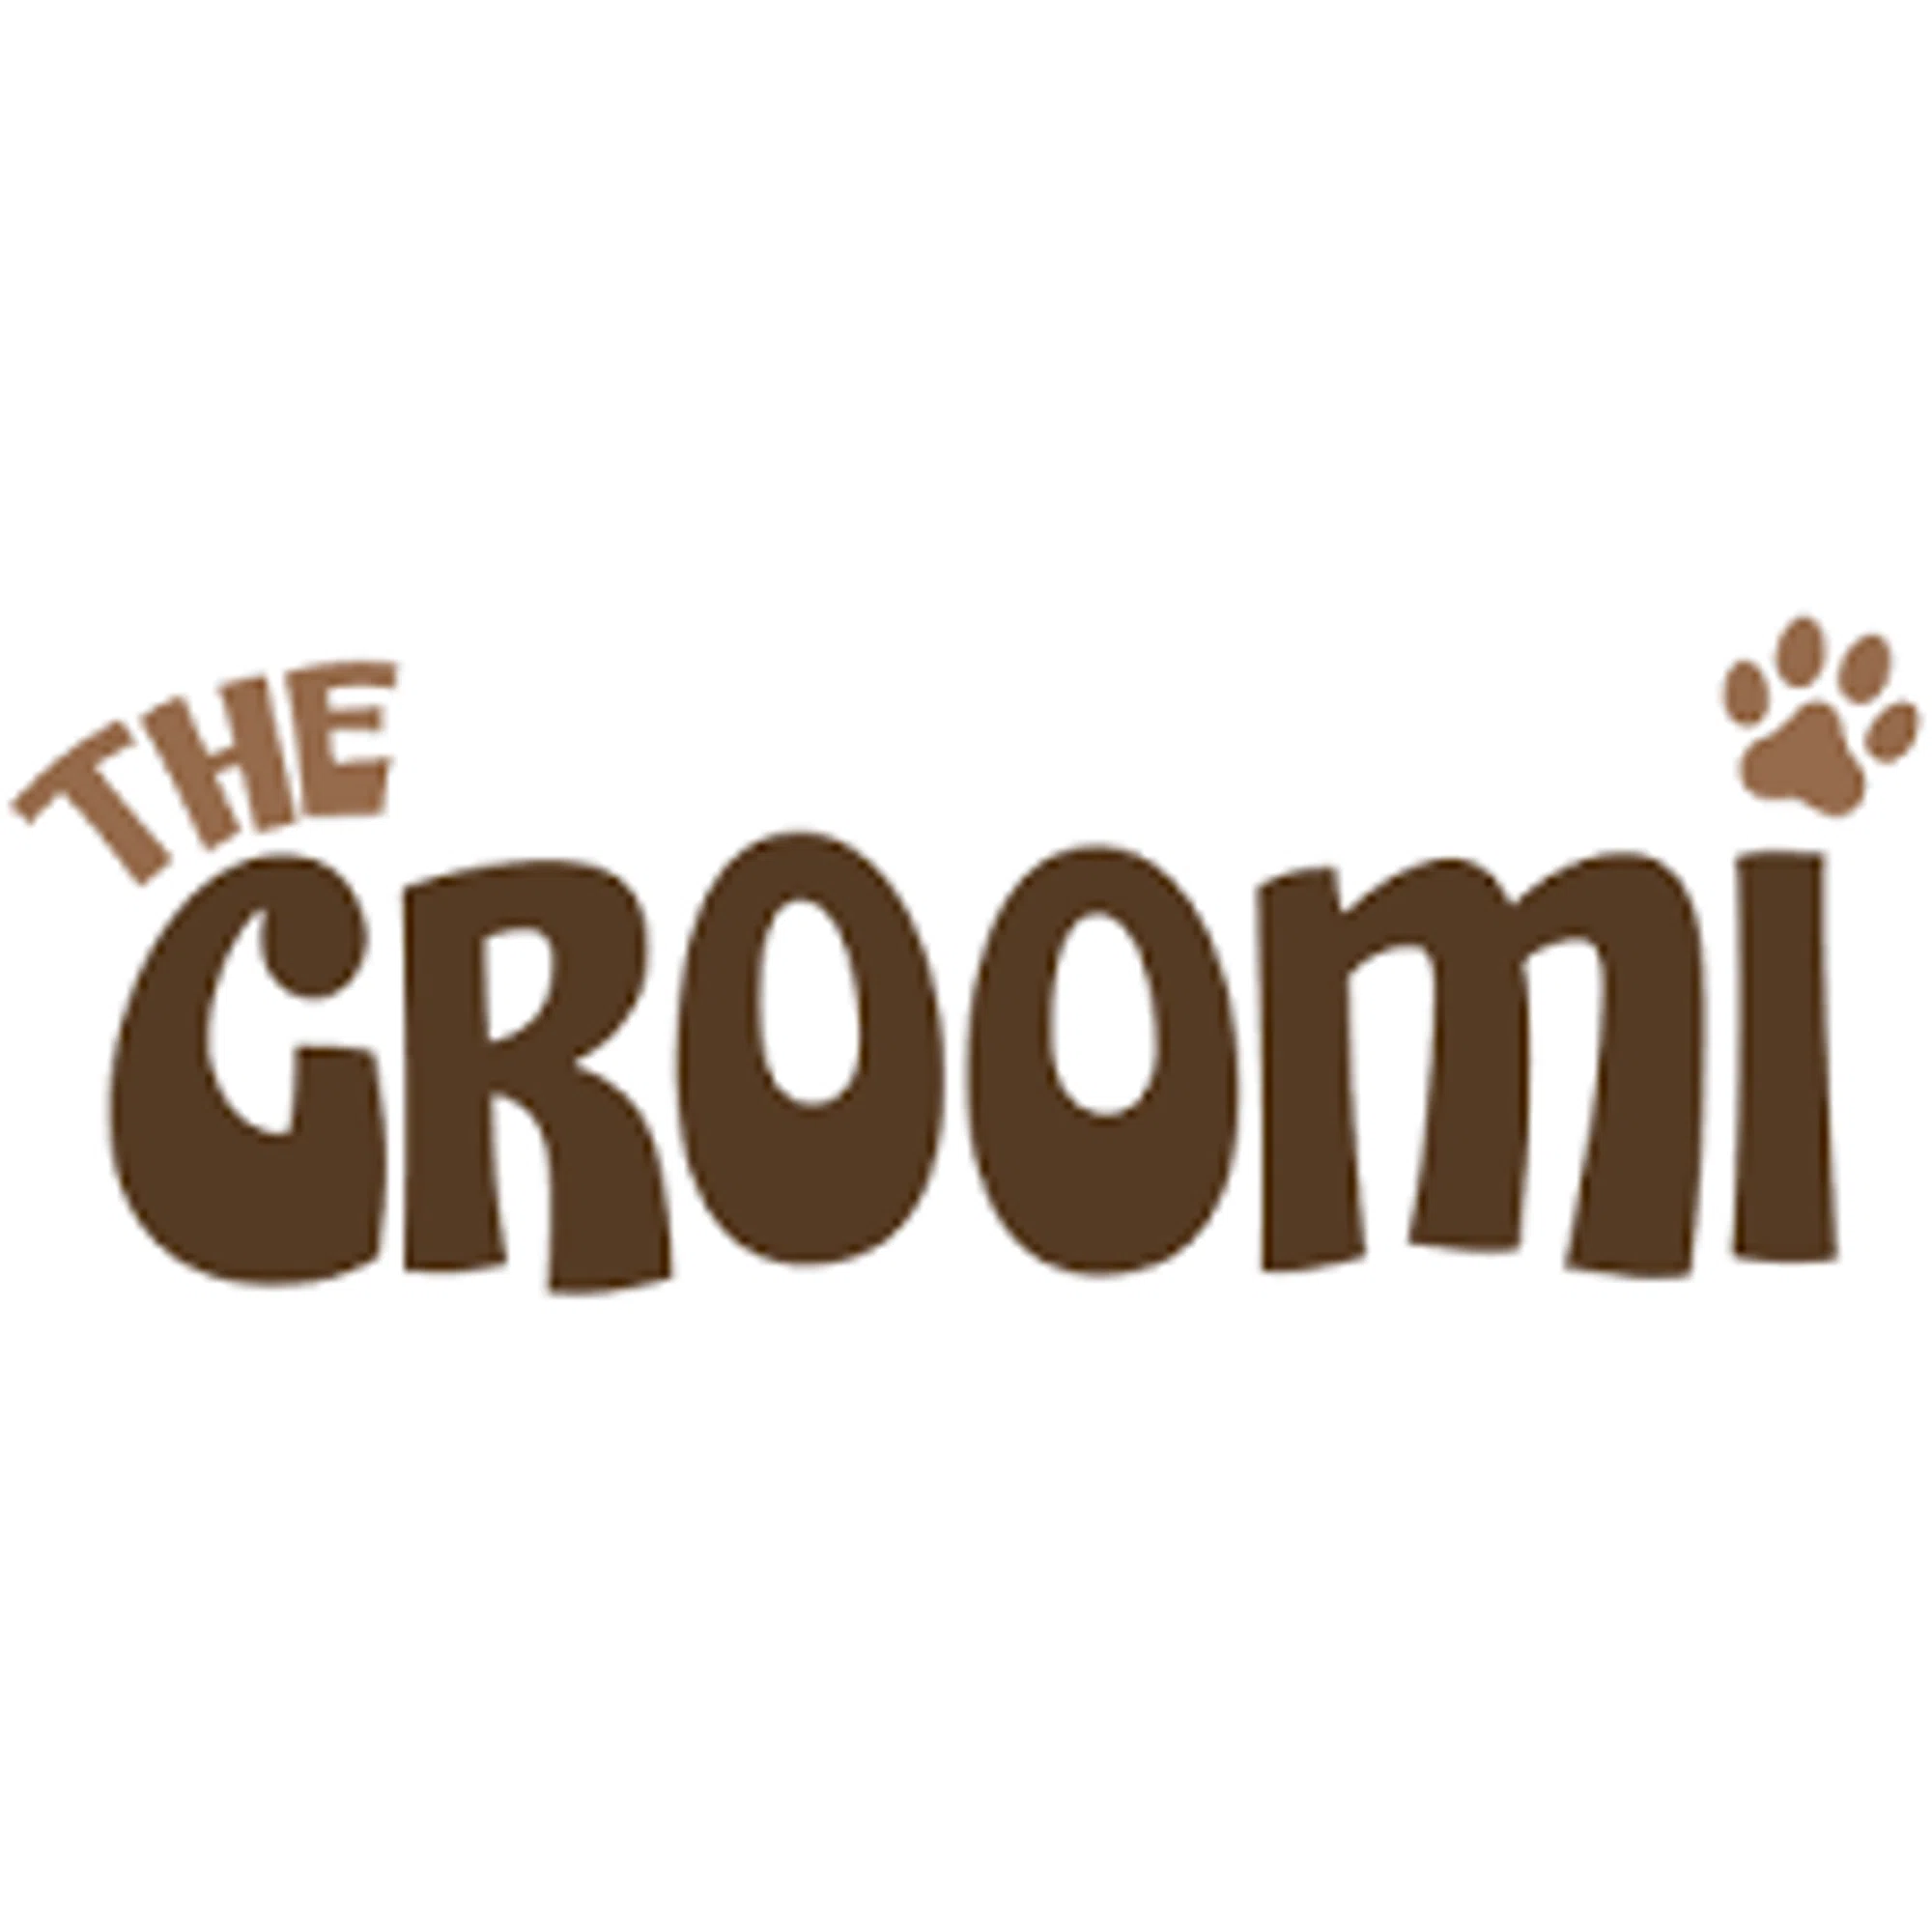 The Groomi